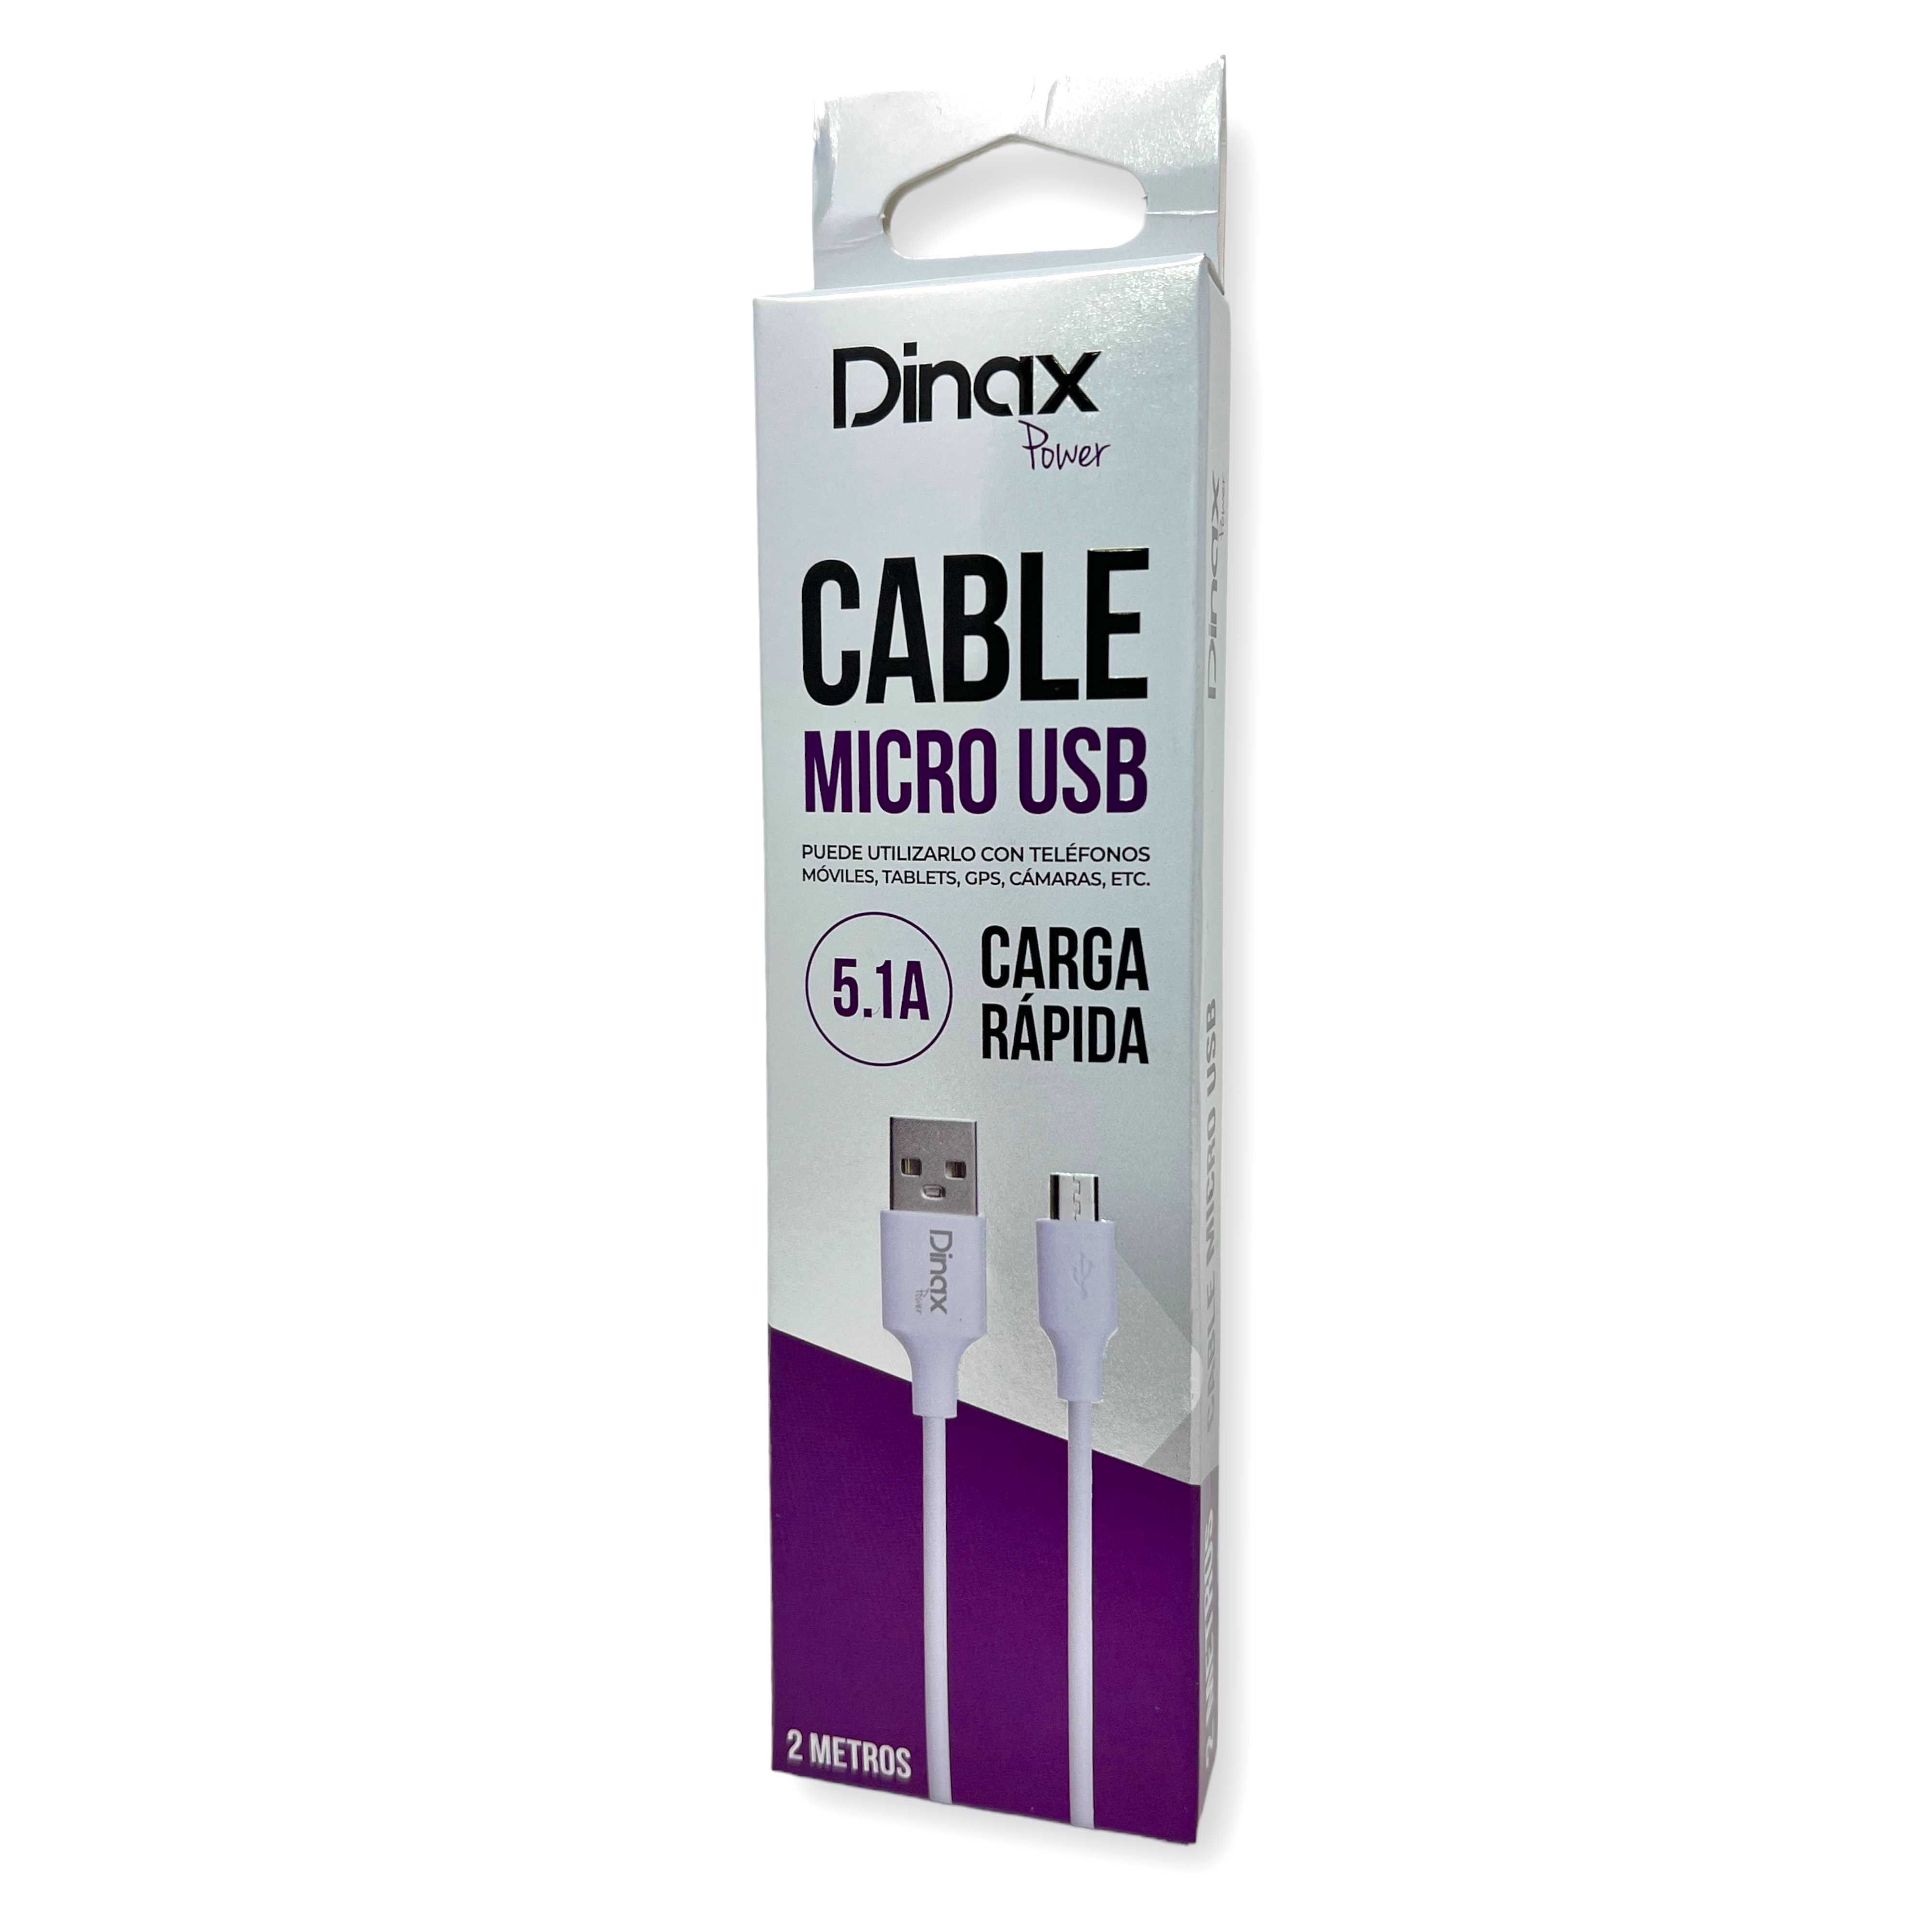 CABLE USB A MICRO USB DINAX 5.1A 2M CARGA RAPIDA LISO DX-2M46V8